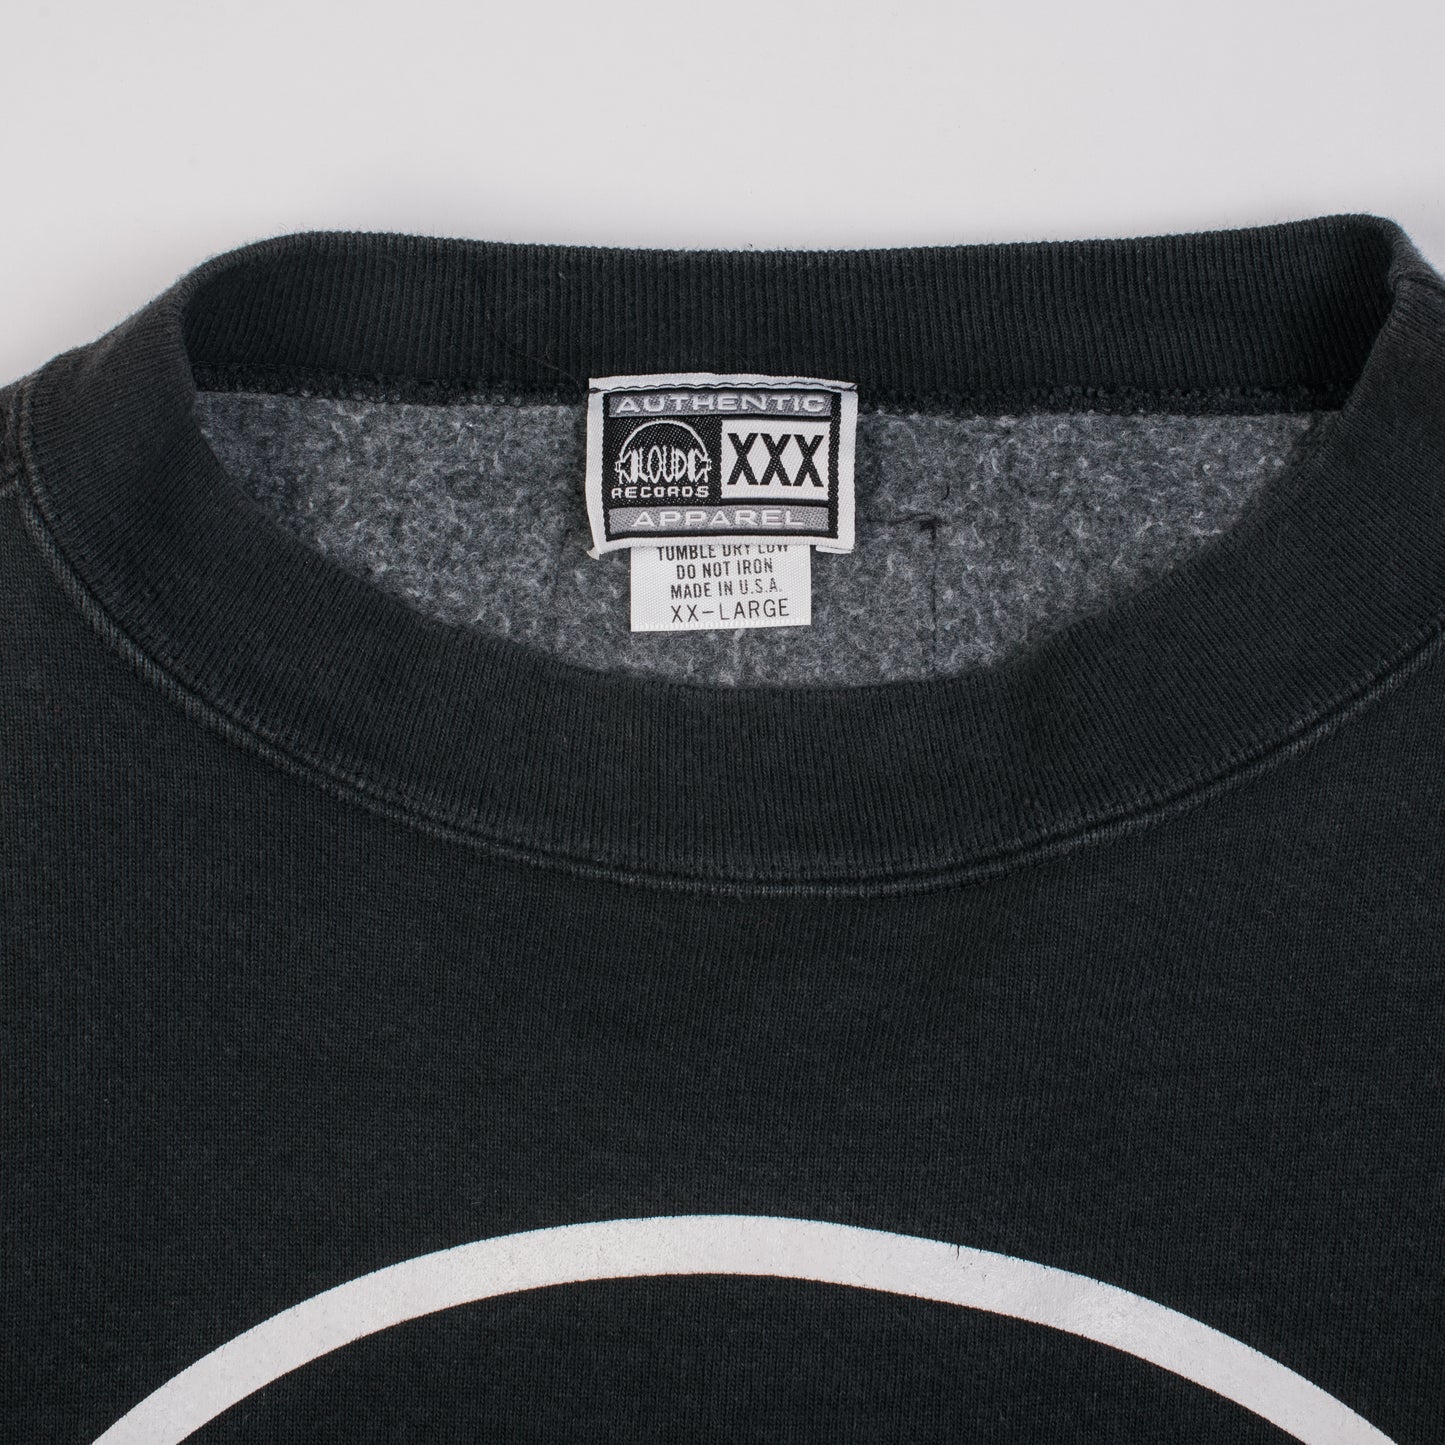 Vintage 90’s Loud Records Staff Sweatshirt